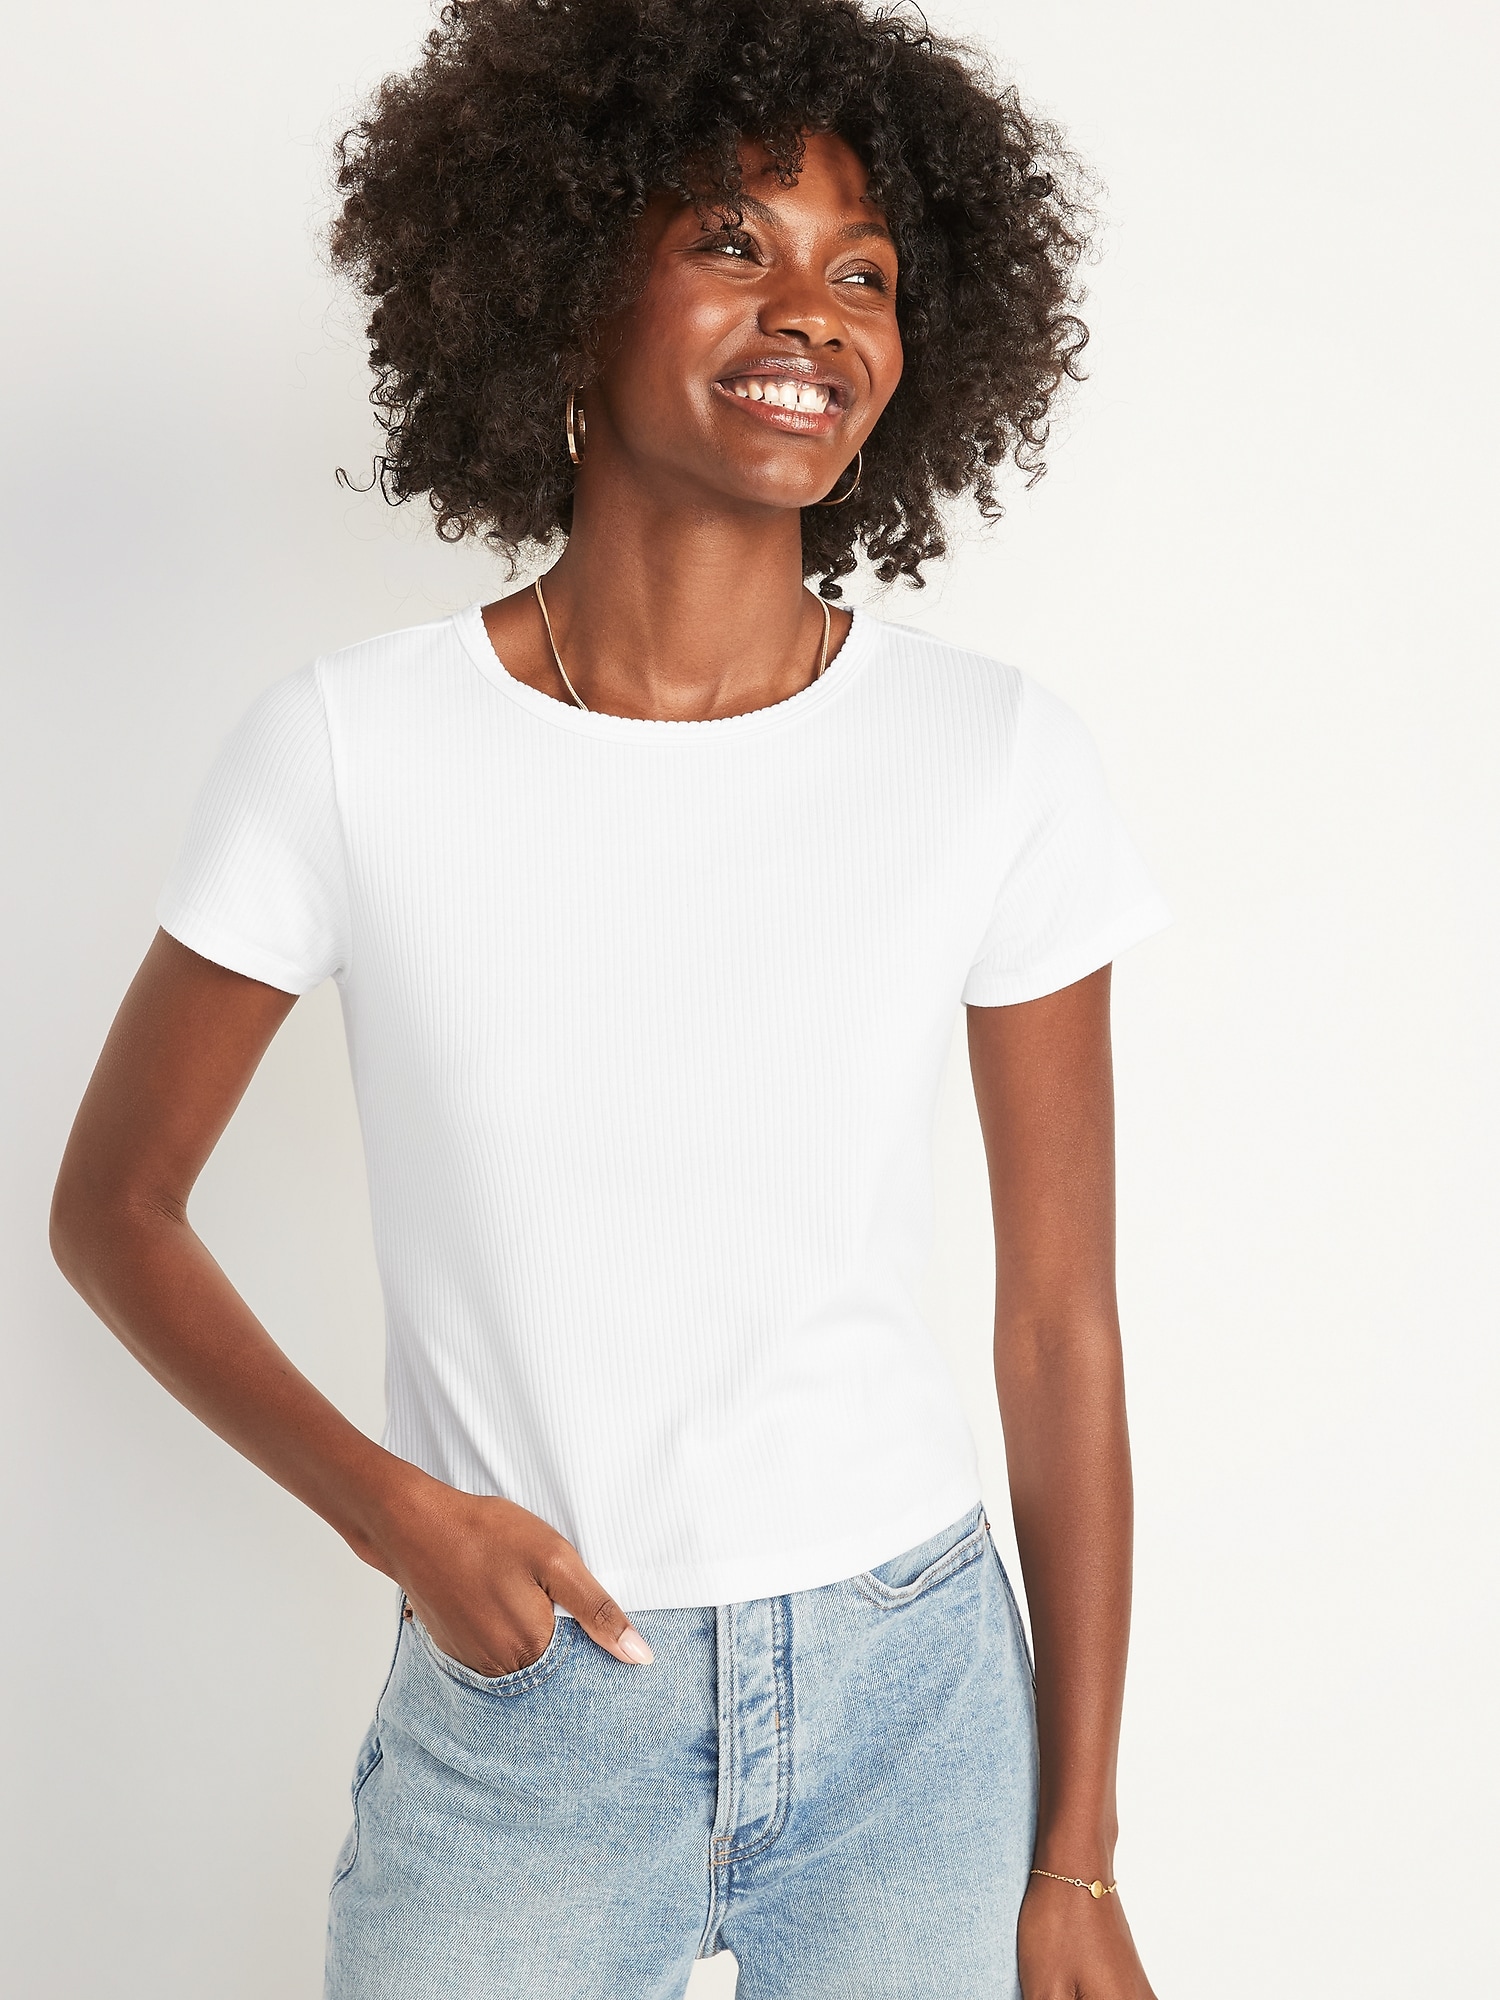 Womens Casual Tops Long Sleeve T Shirts Neck Slim Fit Rib-Knit Tee